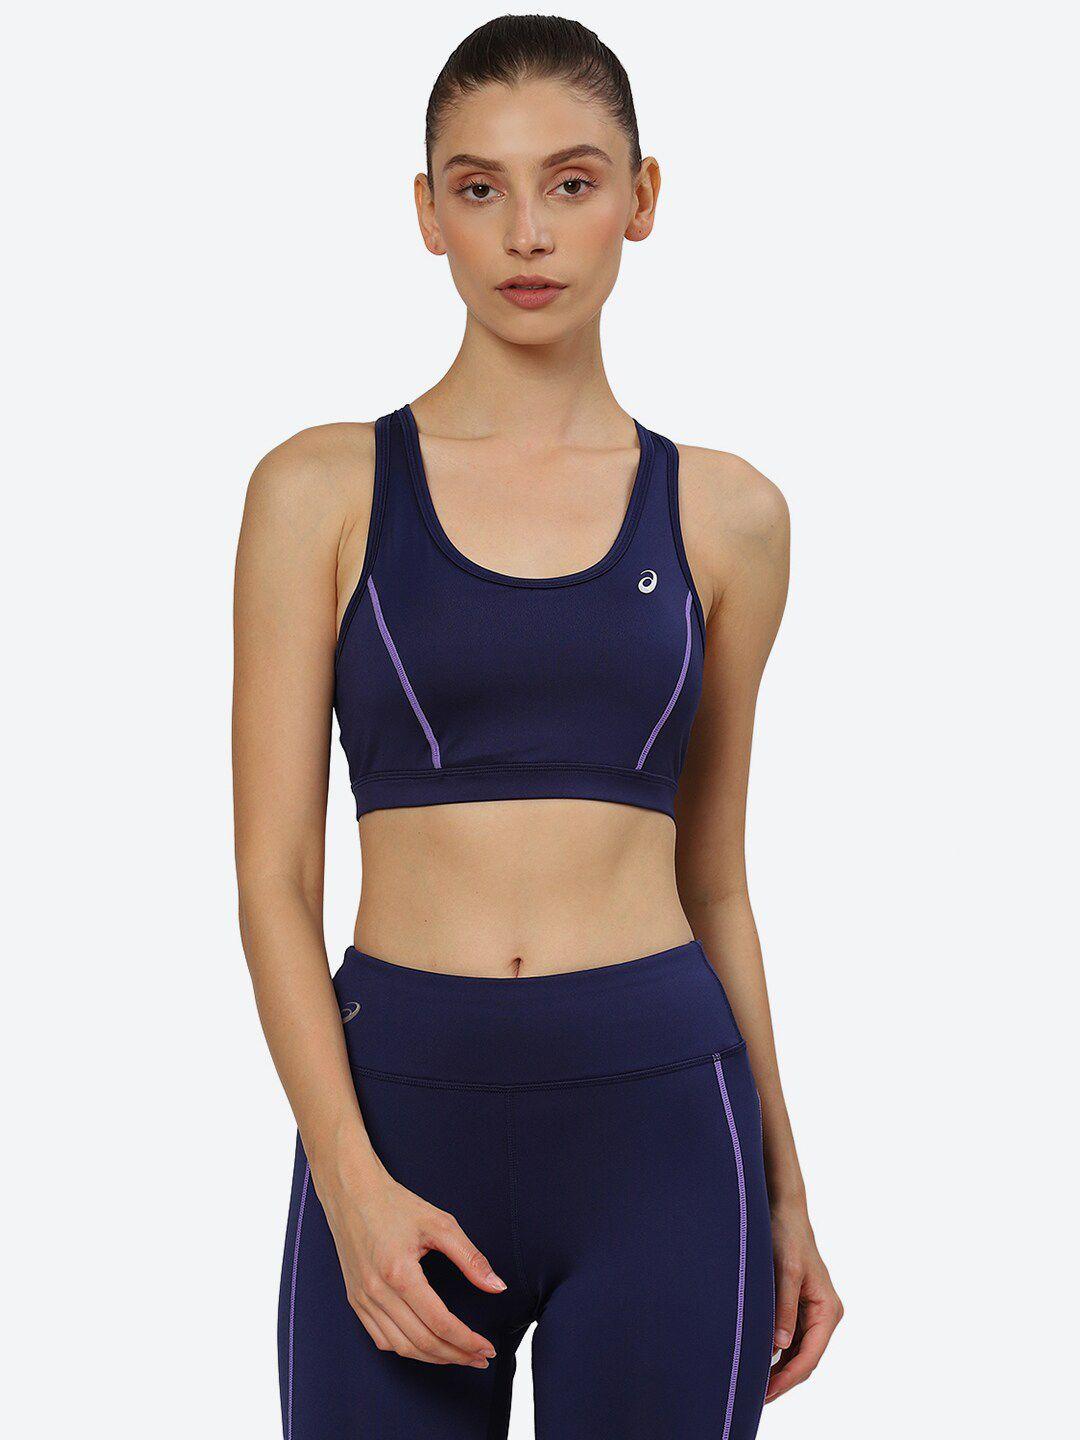 asics-training-core-brand-logo-printed-workout-bra